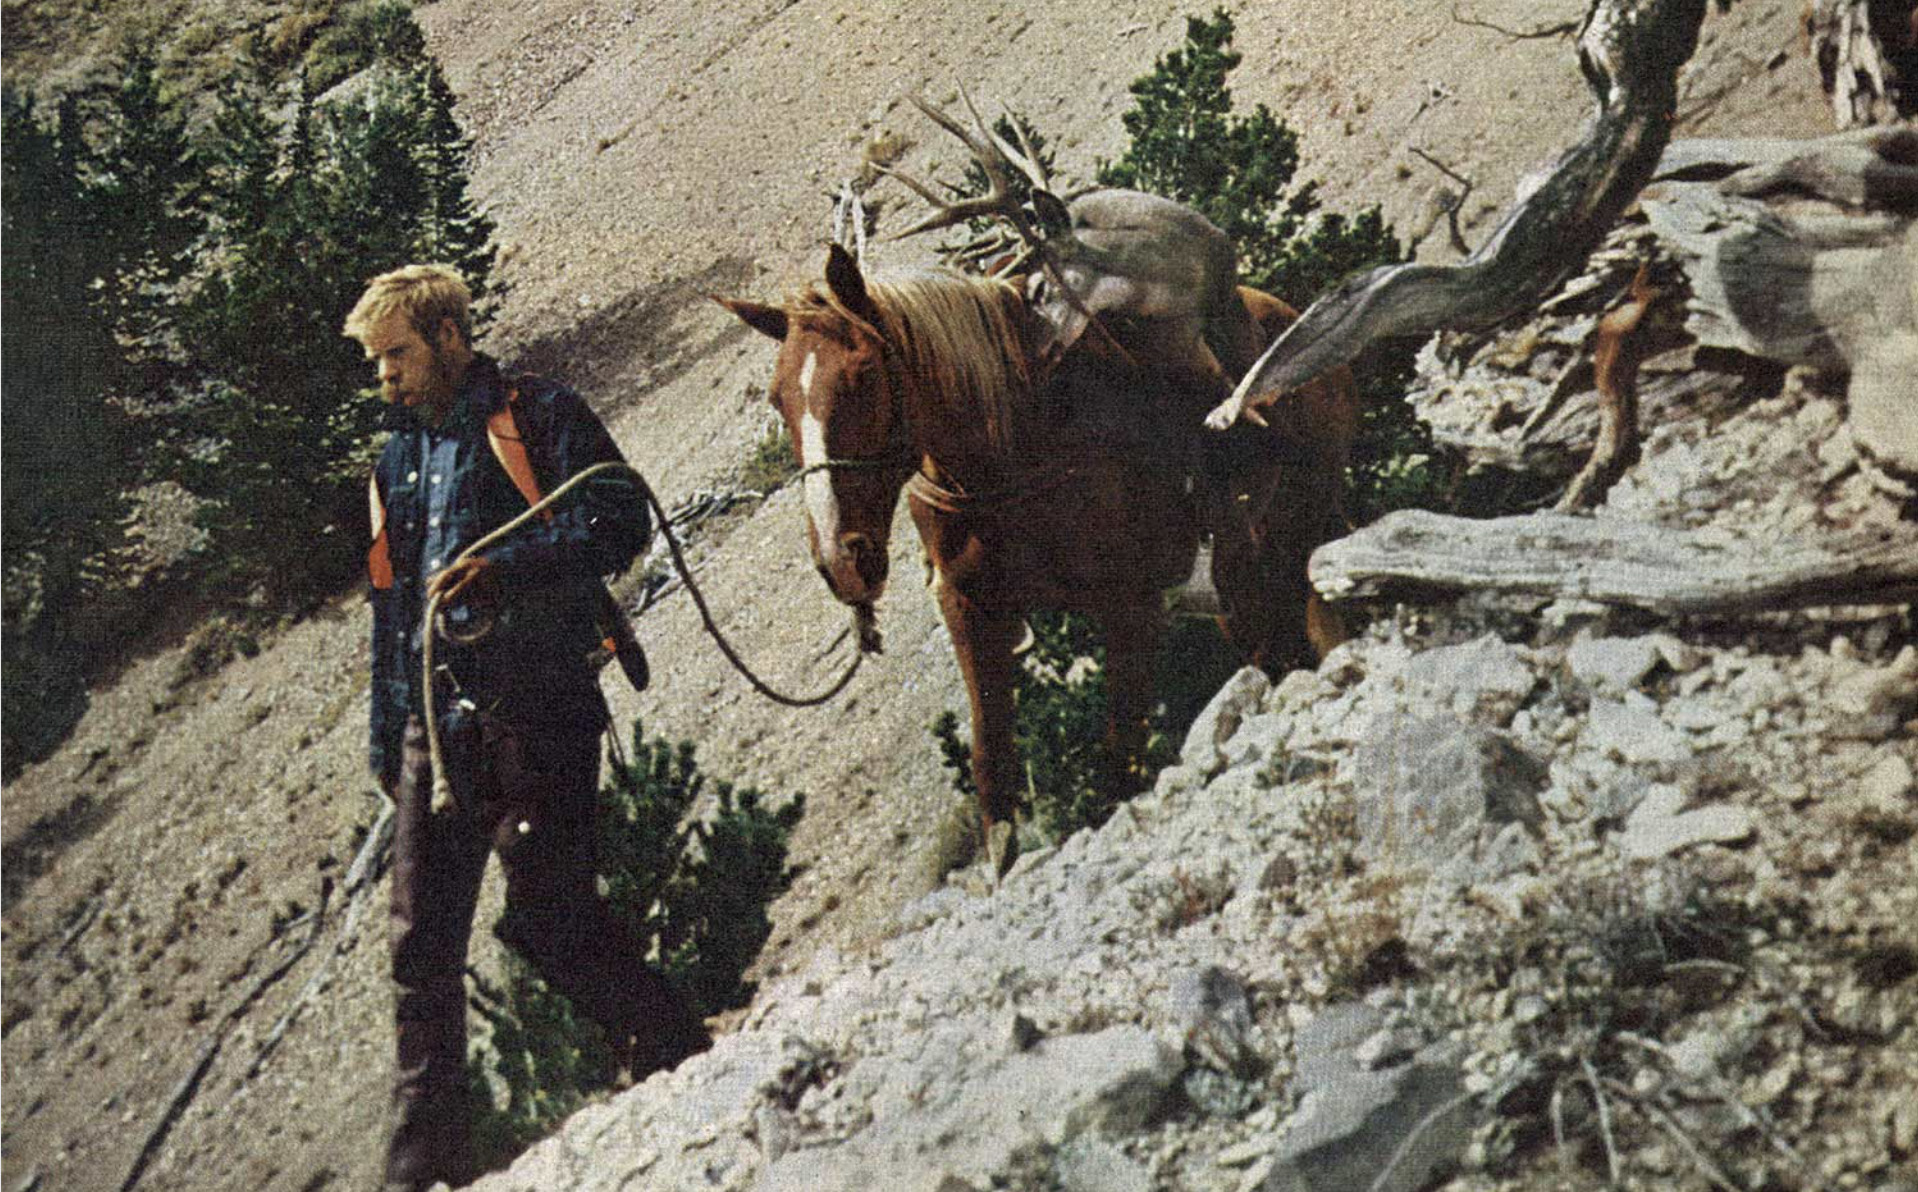 hunter leads horse, carrying dead mule deer, down a steep sidehill